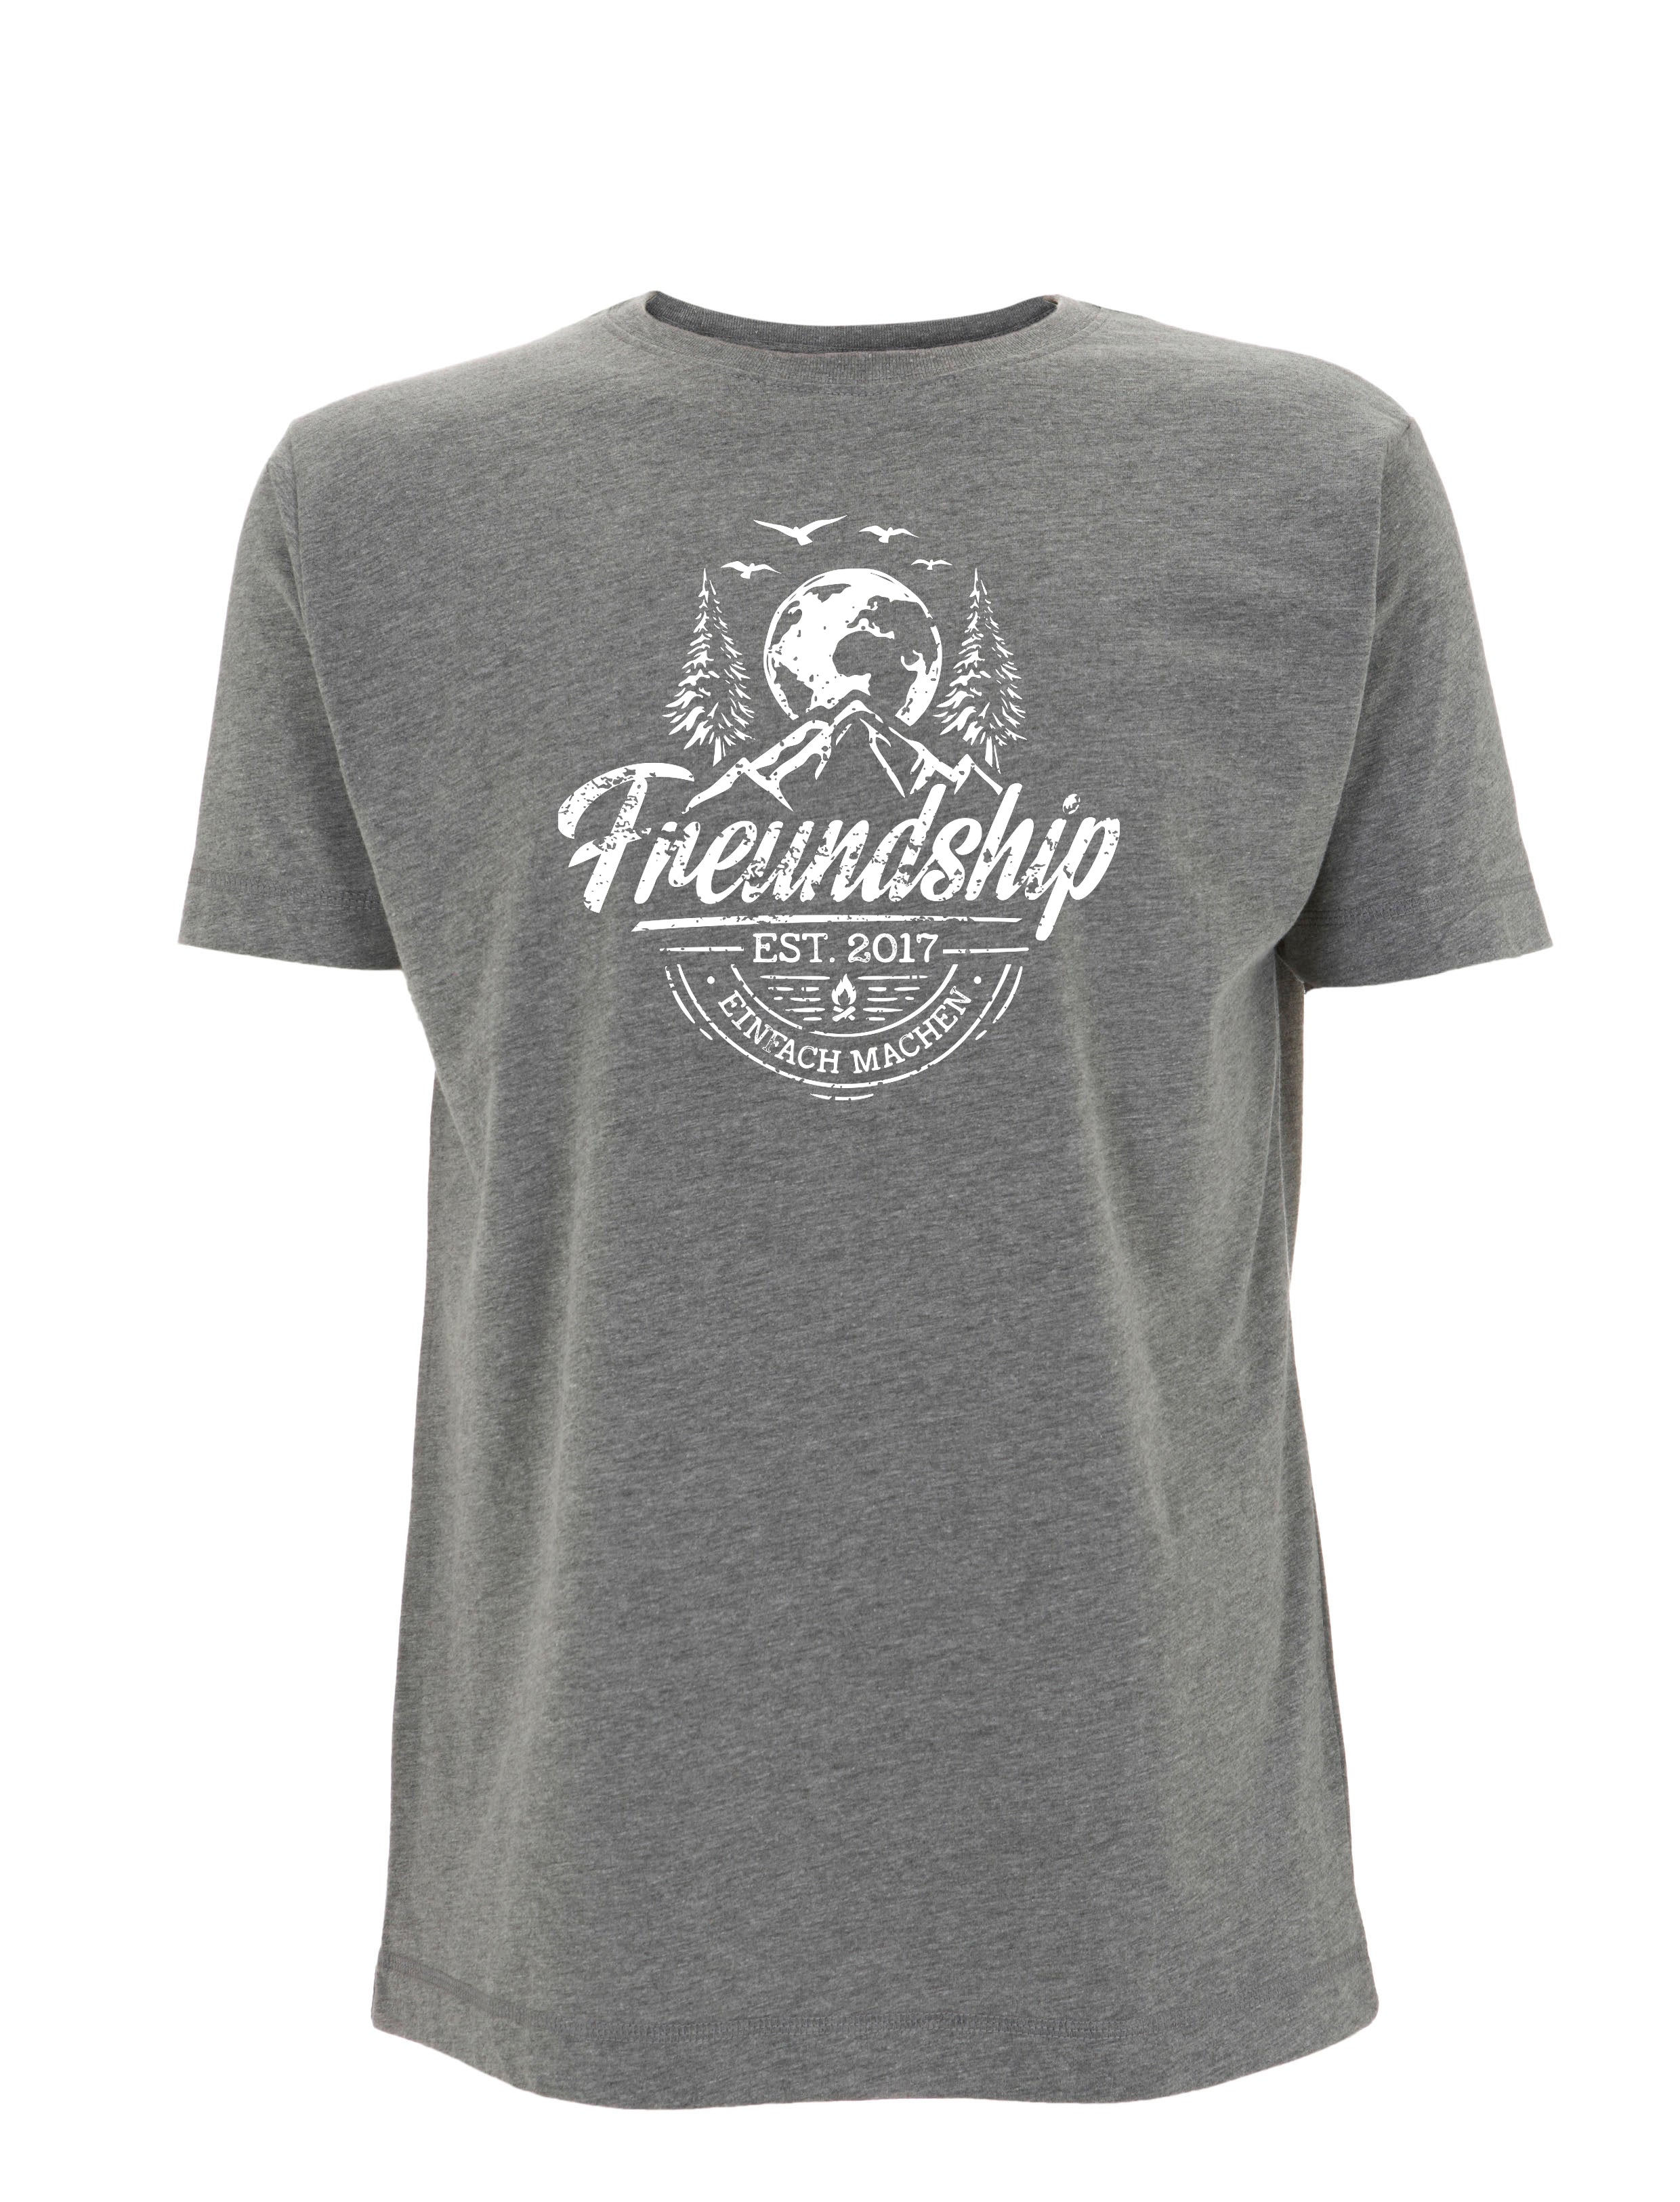 Freundship "einfach machen" Shirt